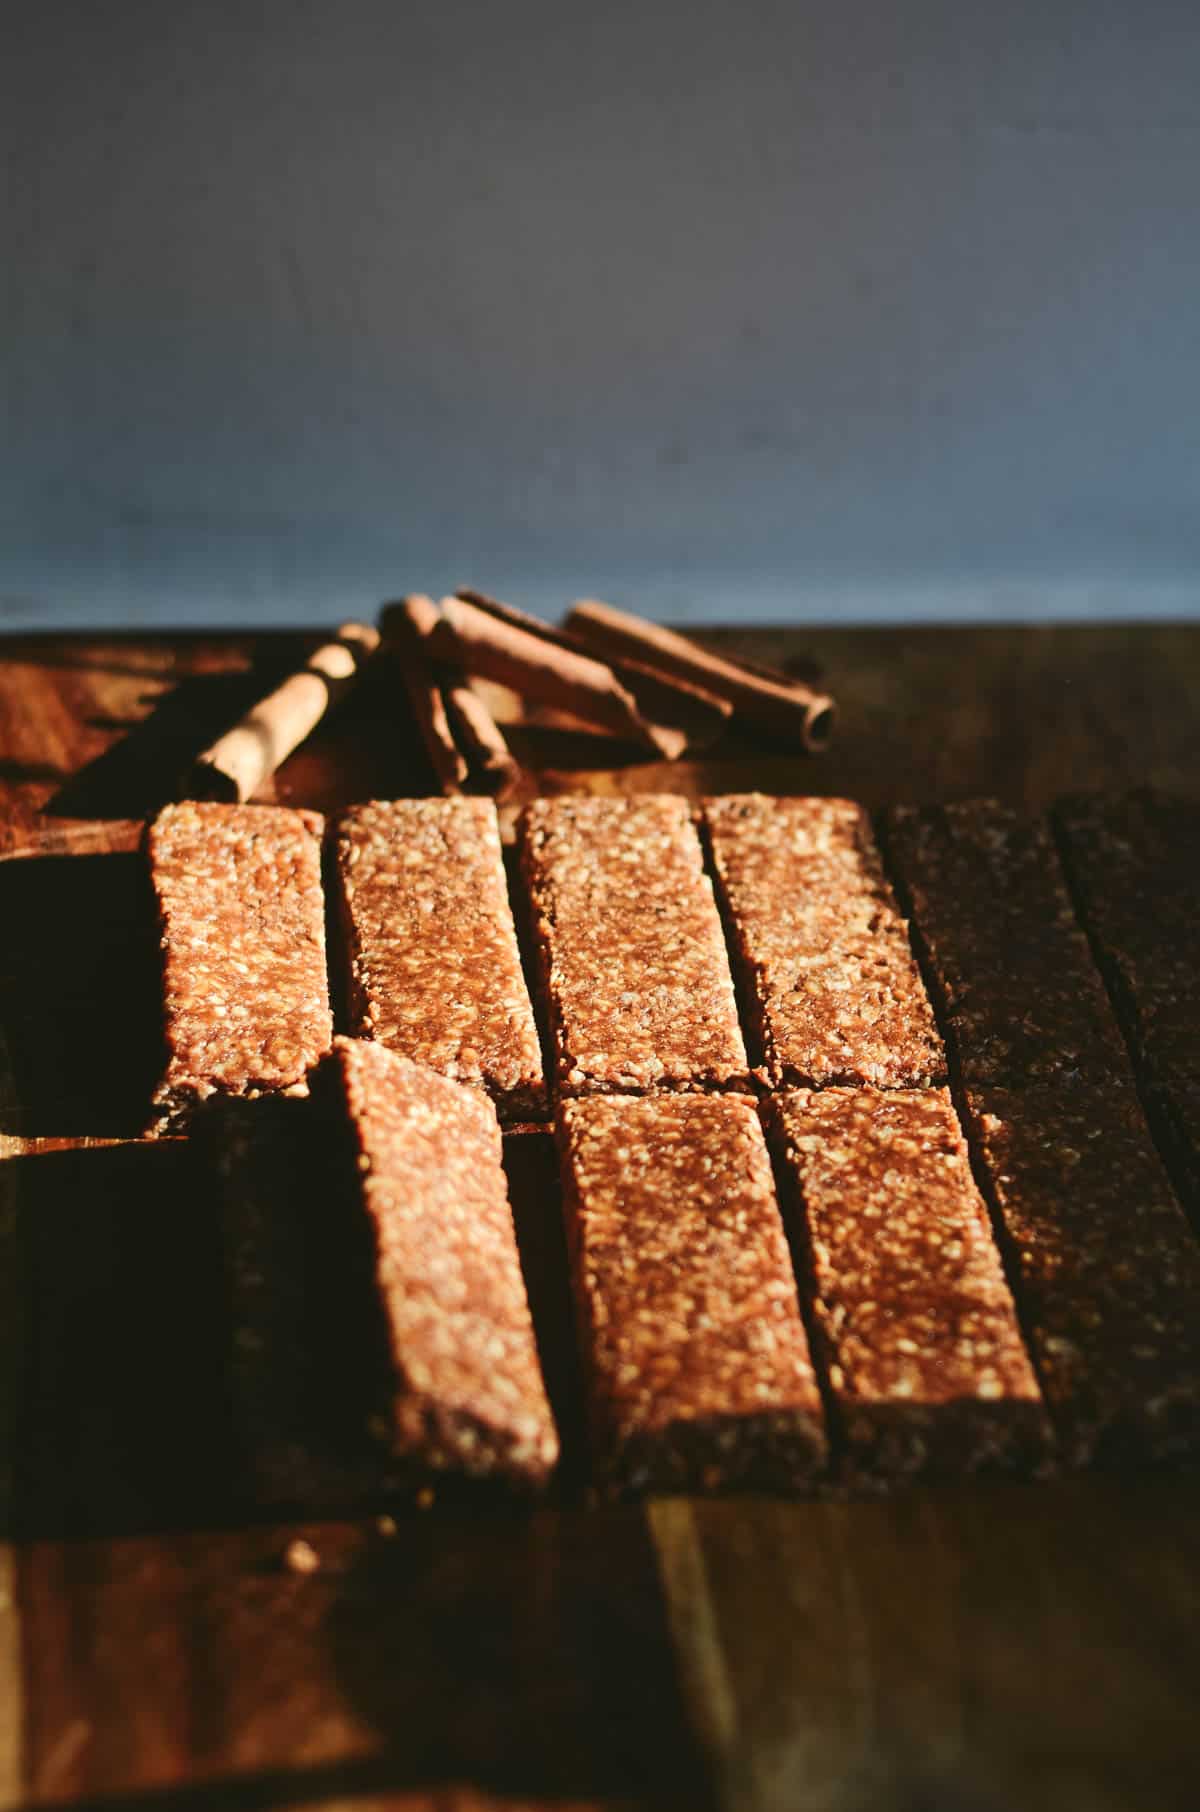 Homemade simple healthy cinnamon granola bars on a cutting board.